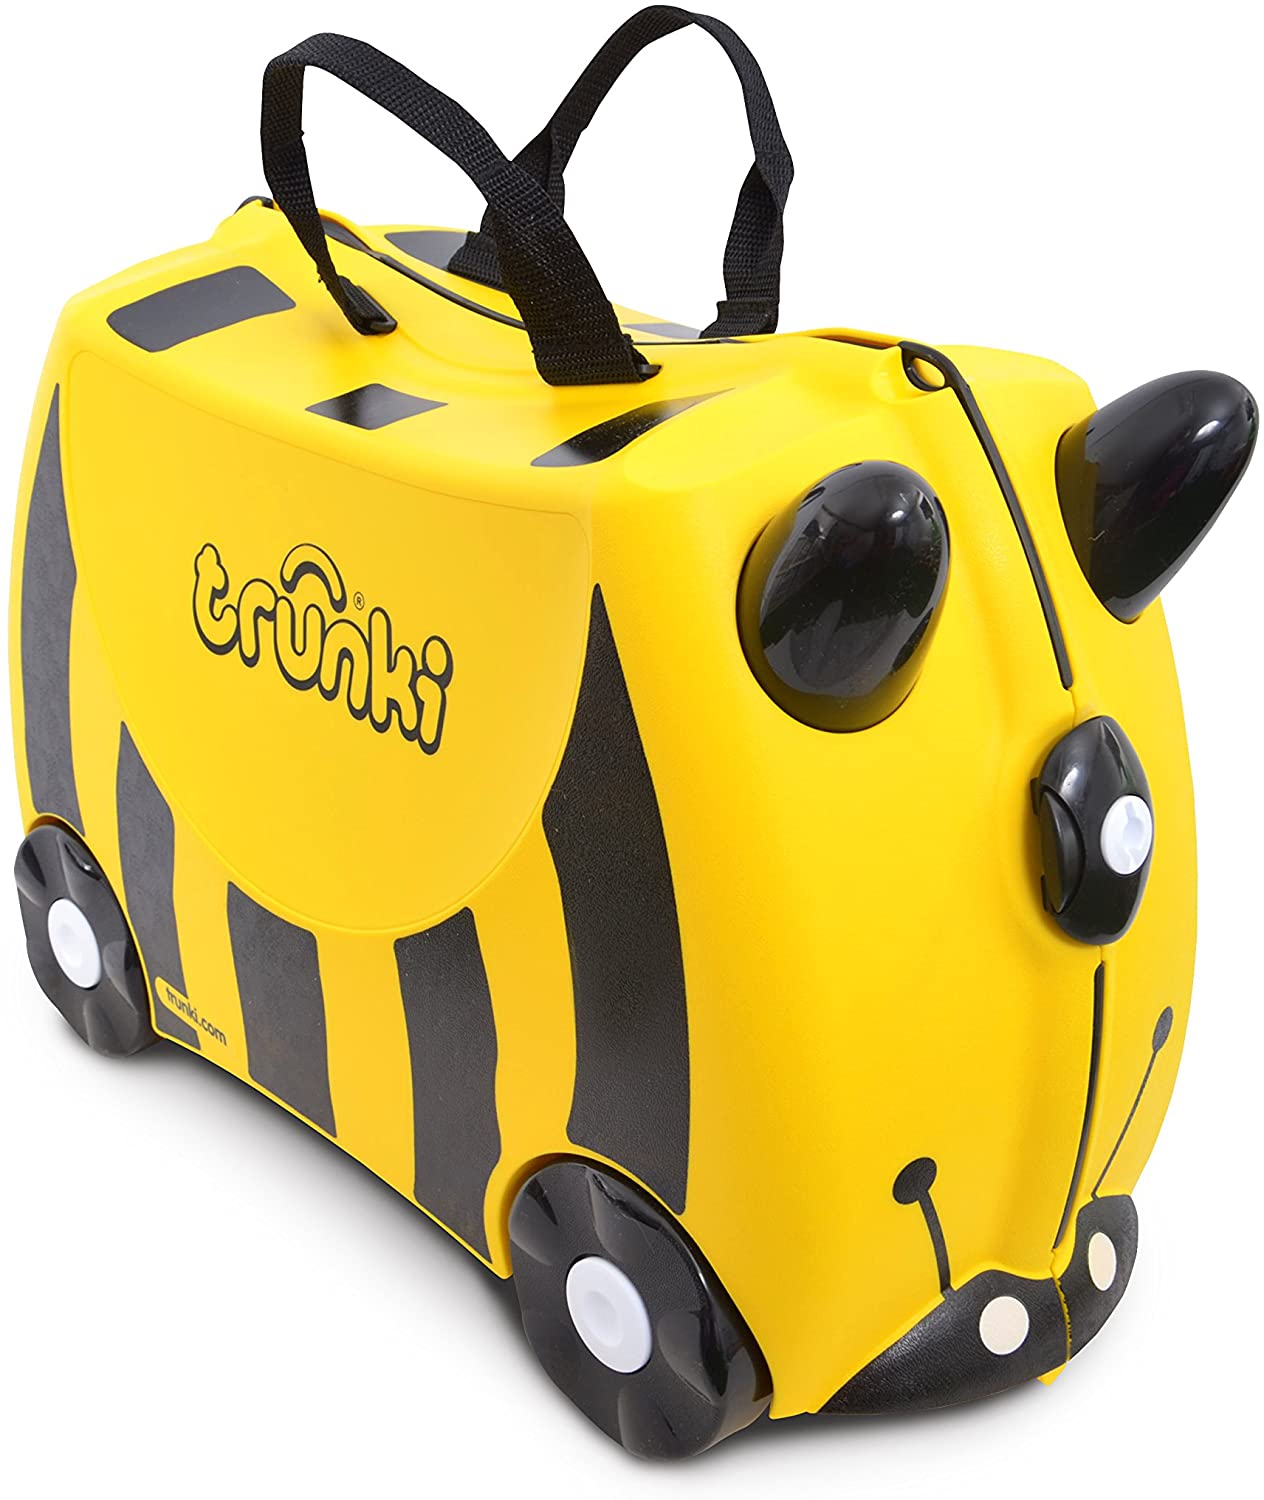 Trunki Original Ride-On Suitcase & Carry-On Kids Luggage